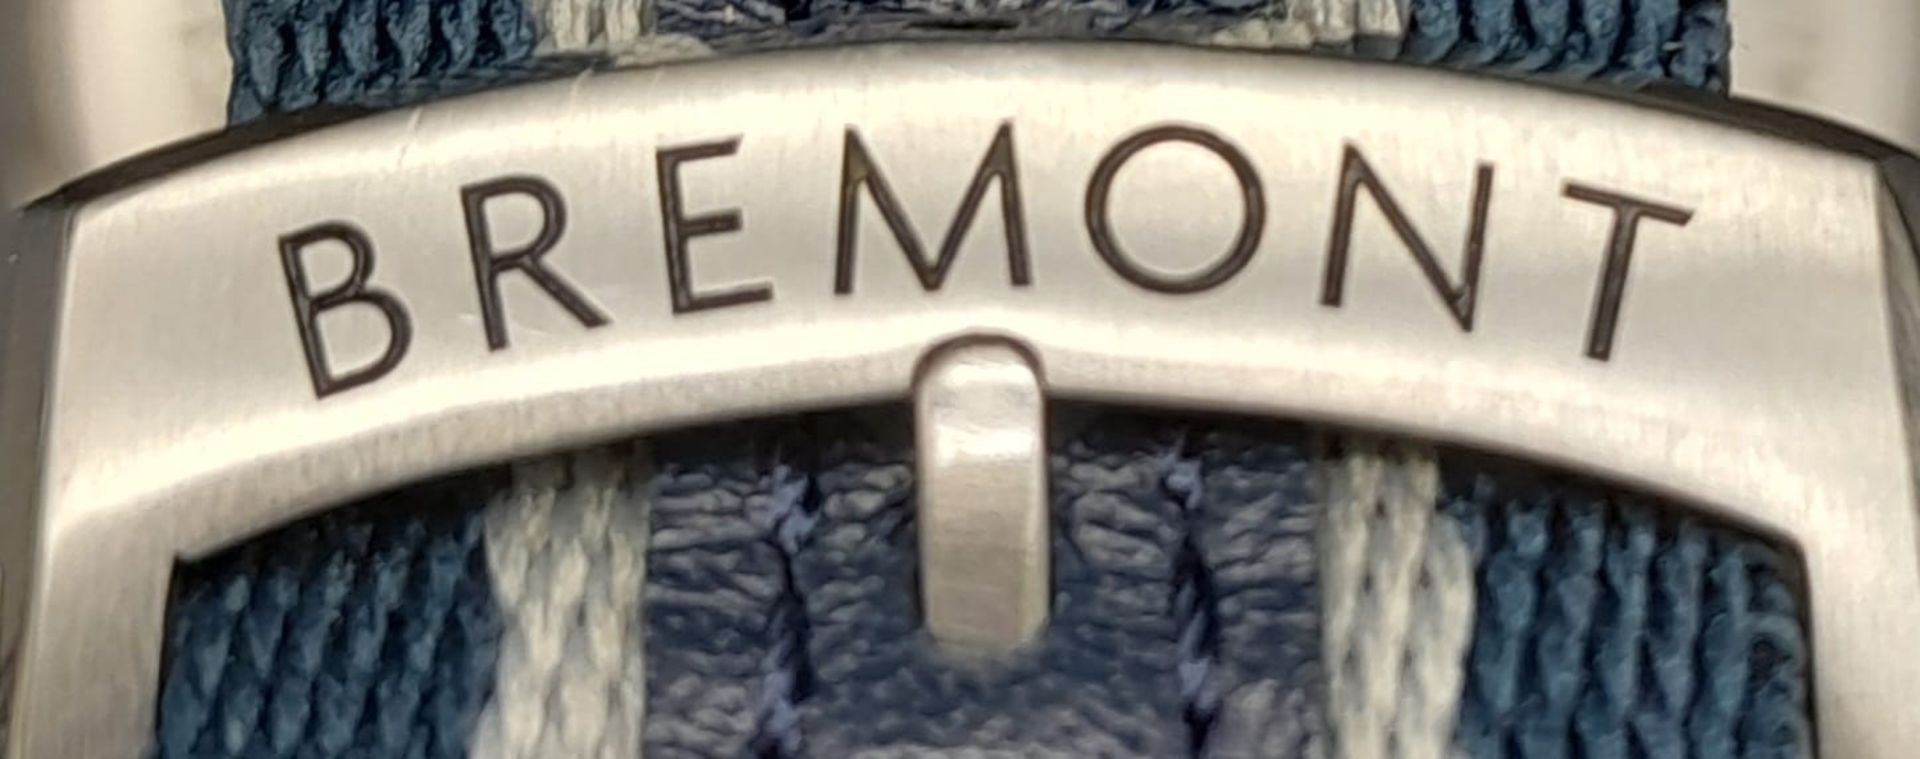 A Bremont Supermarine Karakoram Gents Watch. Striped textile Bremont strap. Stainless steel case - - Image 8 of 17